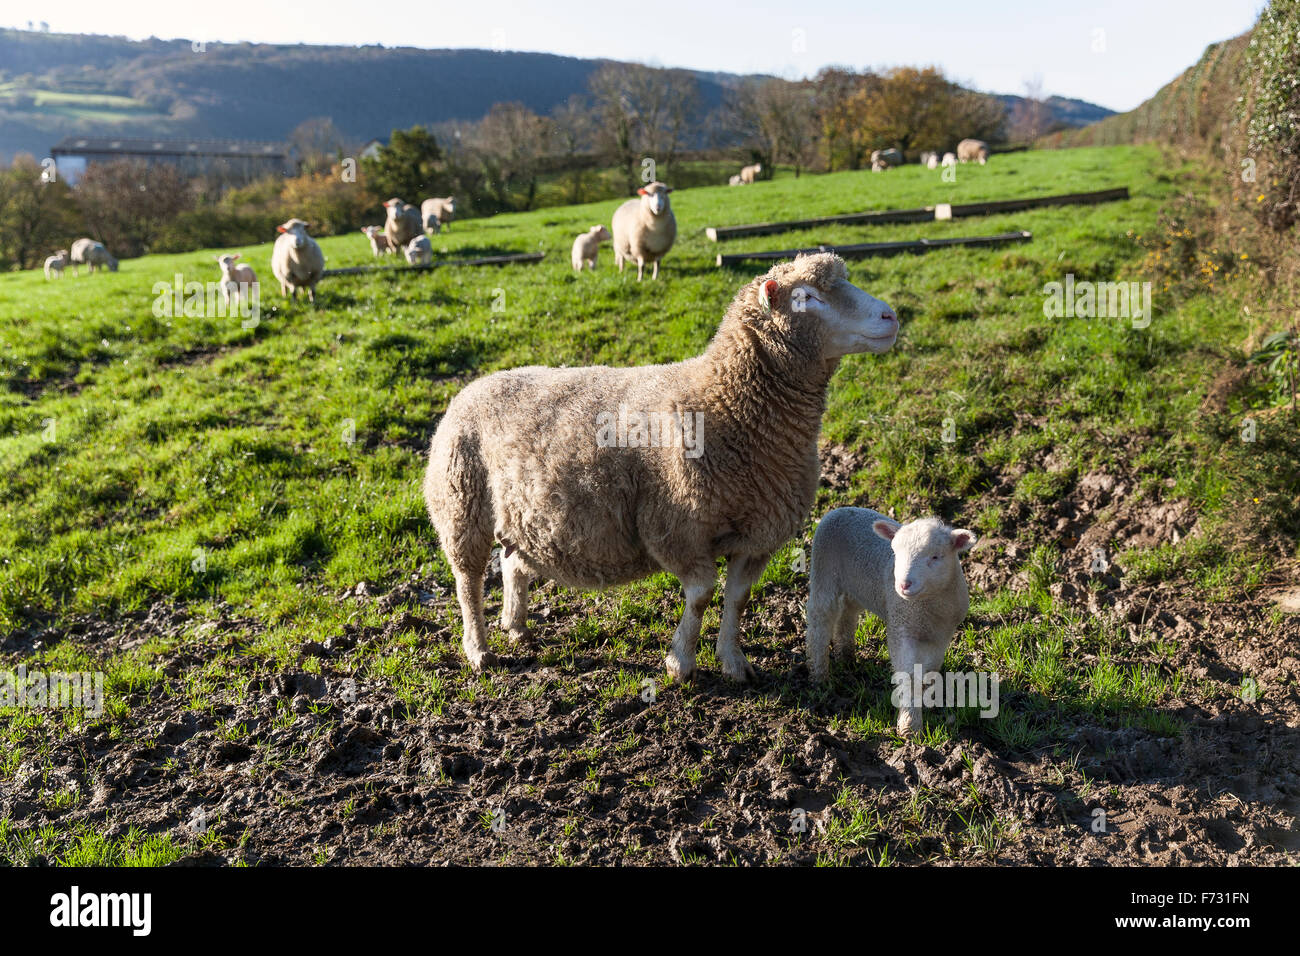 Sheep in fields near Dunsford,dartmoor national park,devon lane,tarmac.winter,solitary,field, sheep, path, landscape, united kin Stock Photo